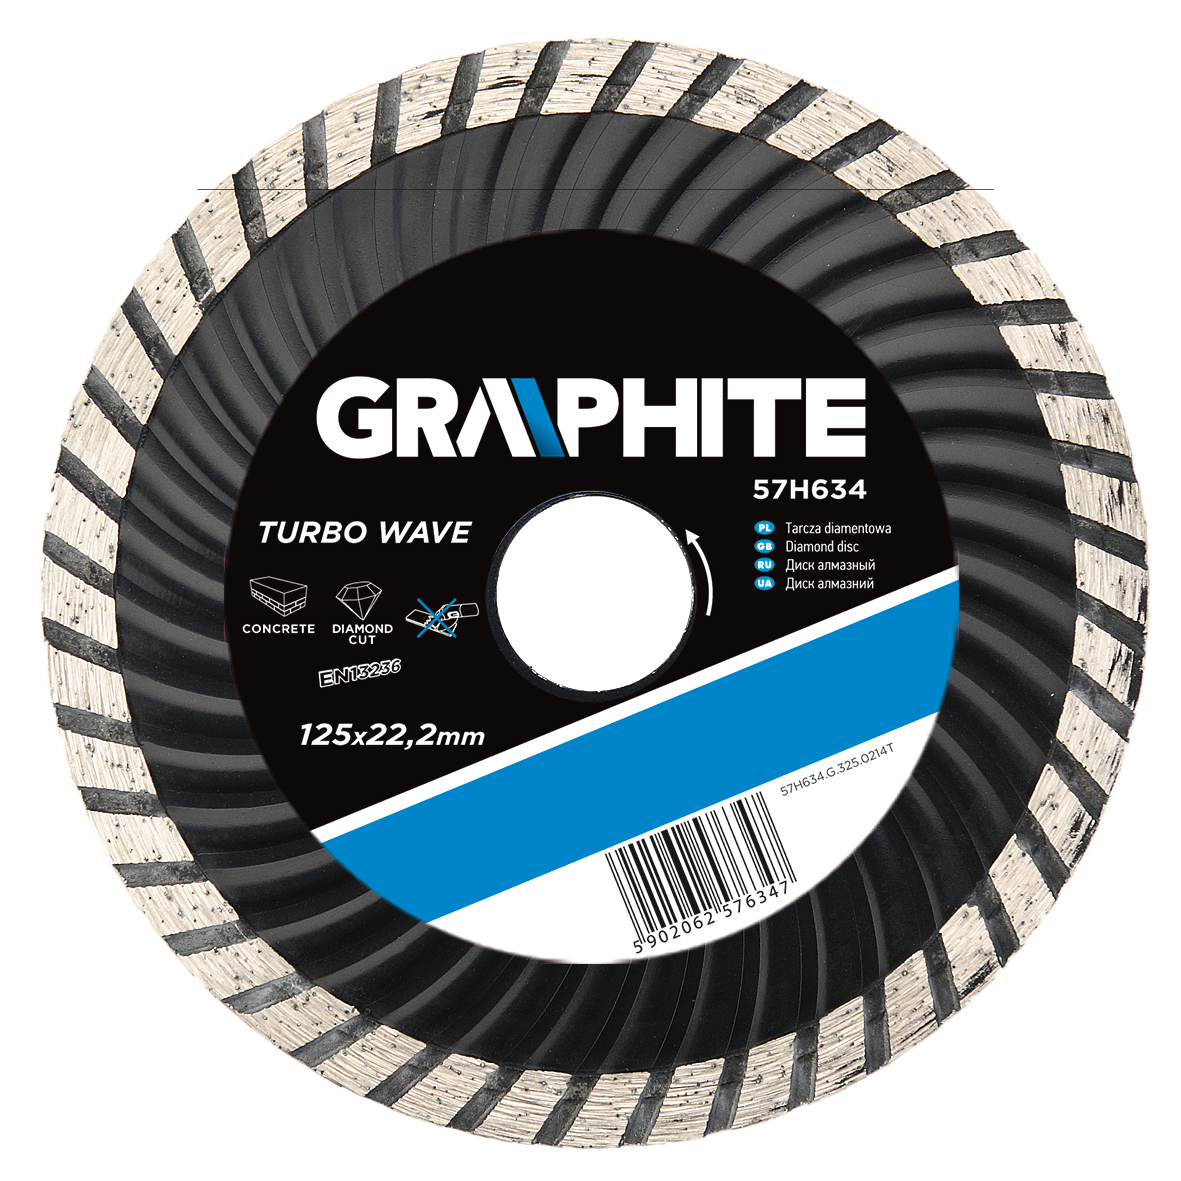 Graphite Tarcza diamentowa 180x22,2mm turbo wave - 57H636